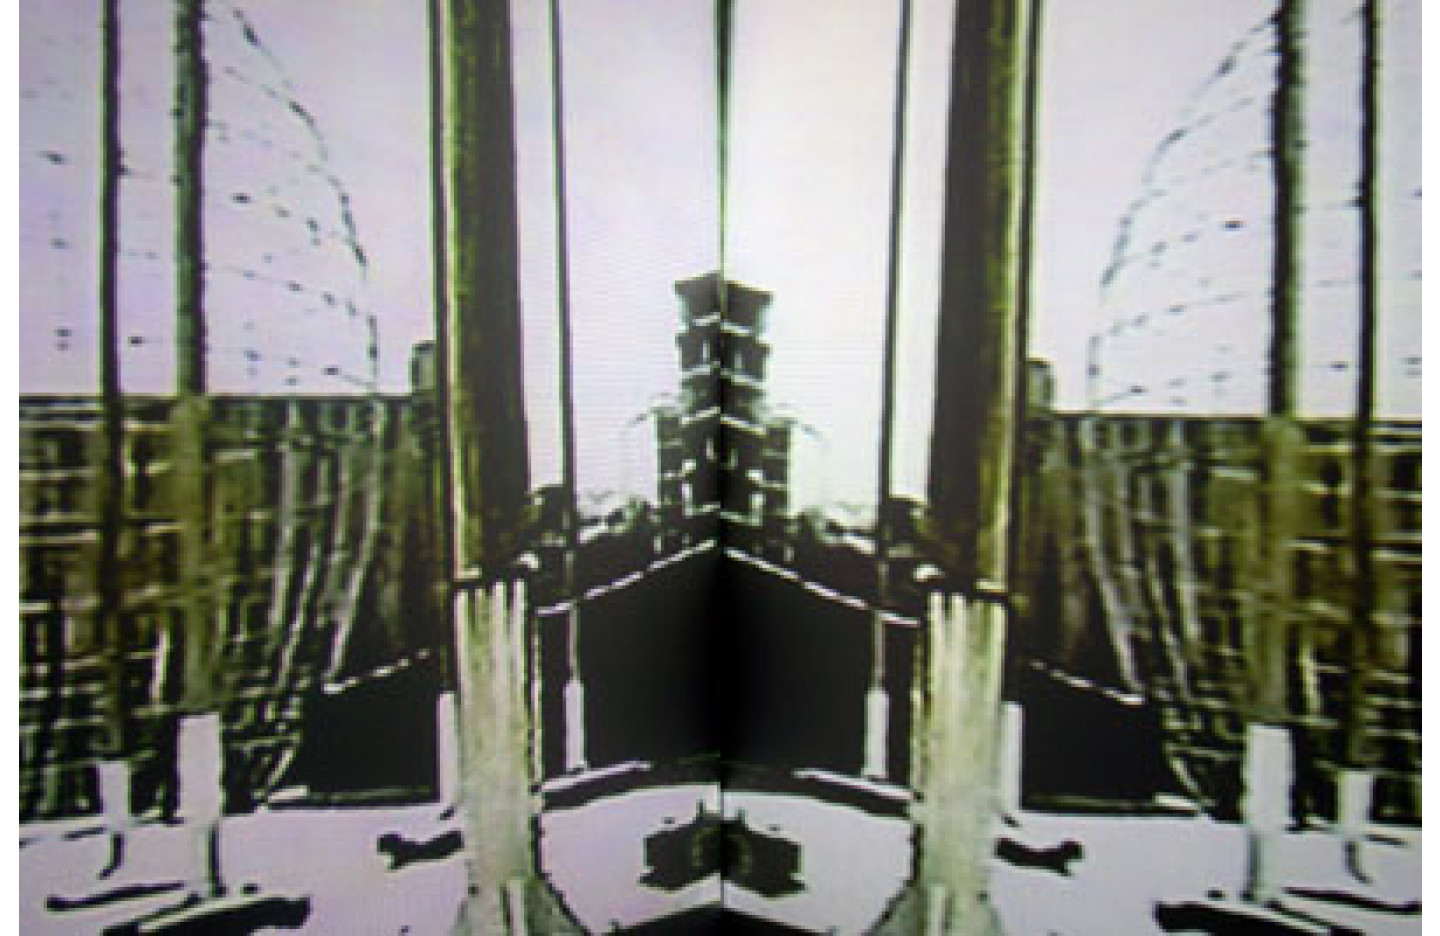 Event Horizon, Ramp Gallery (2003)